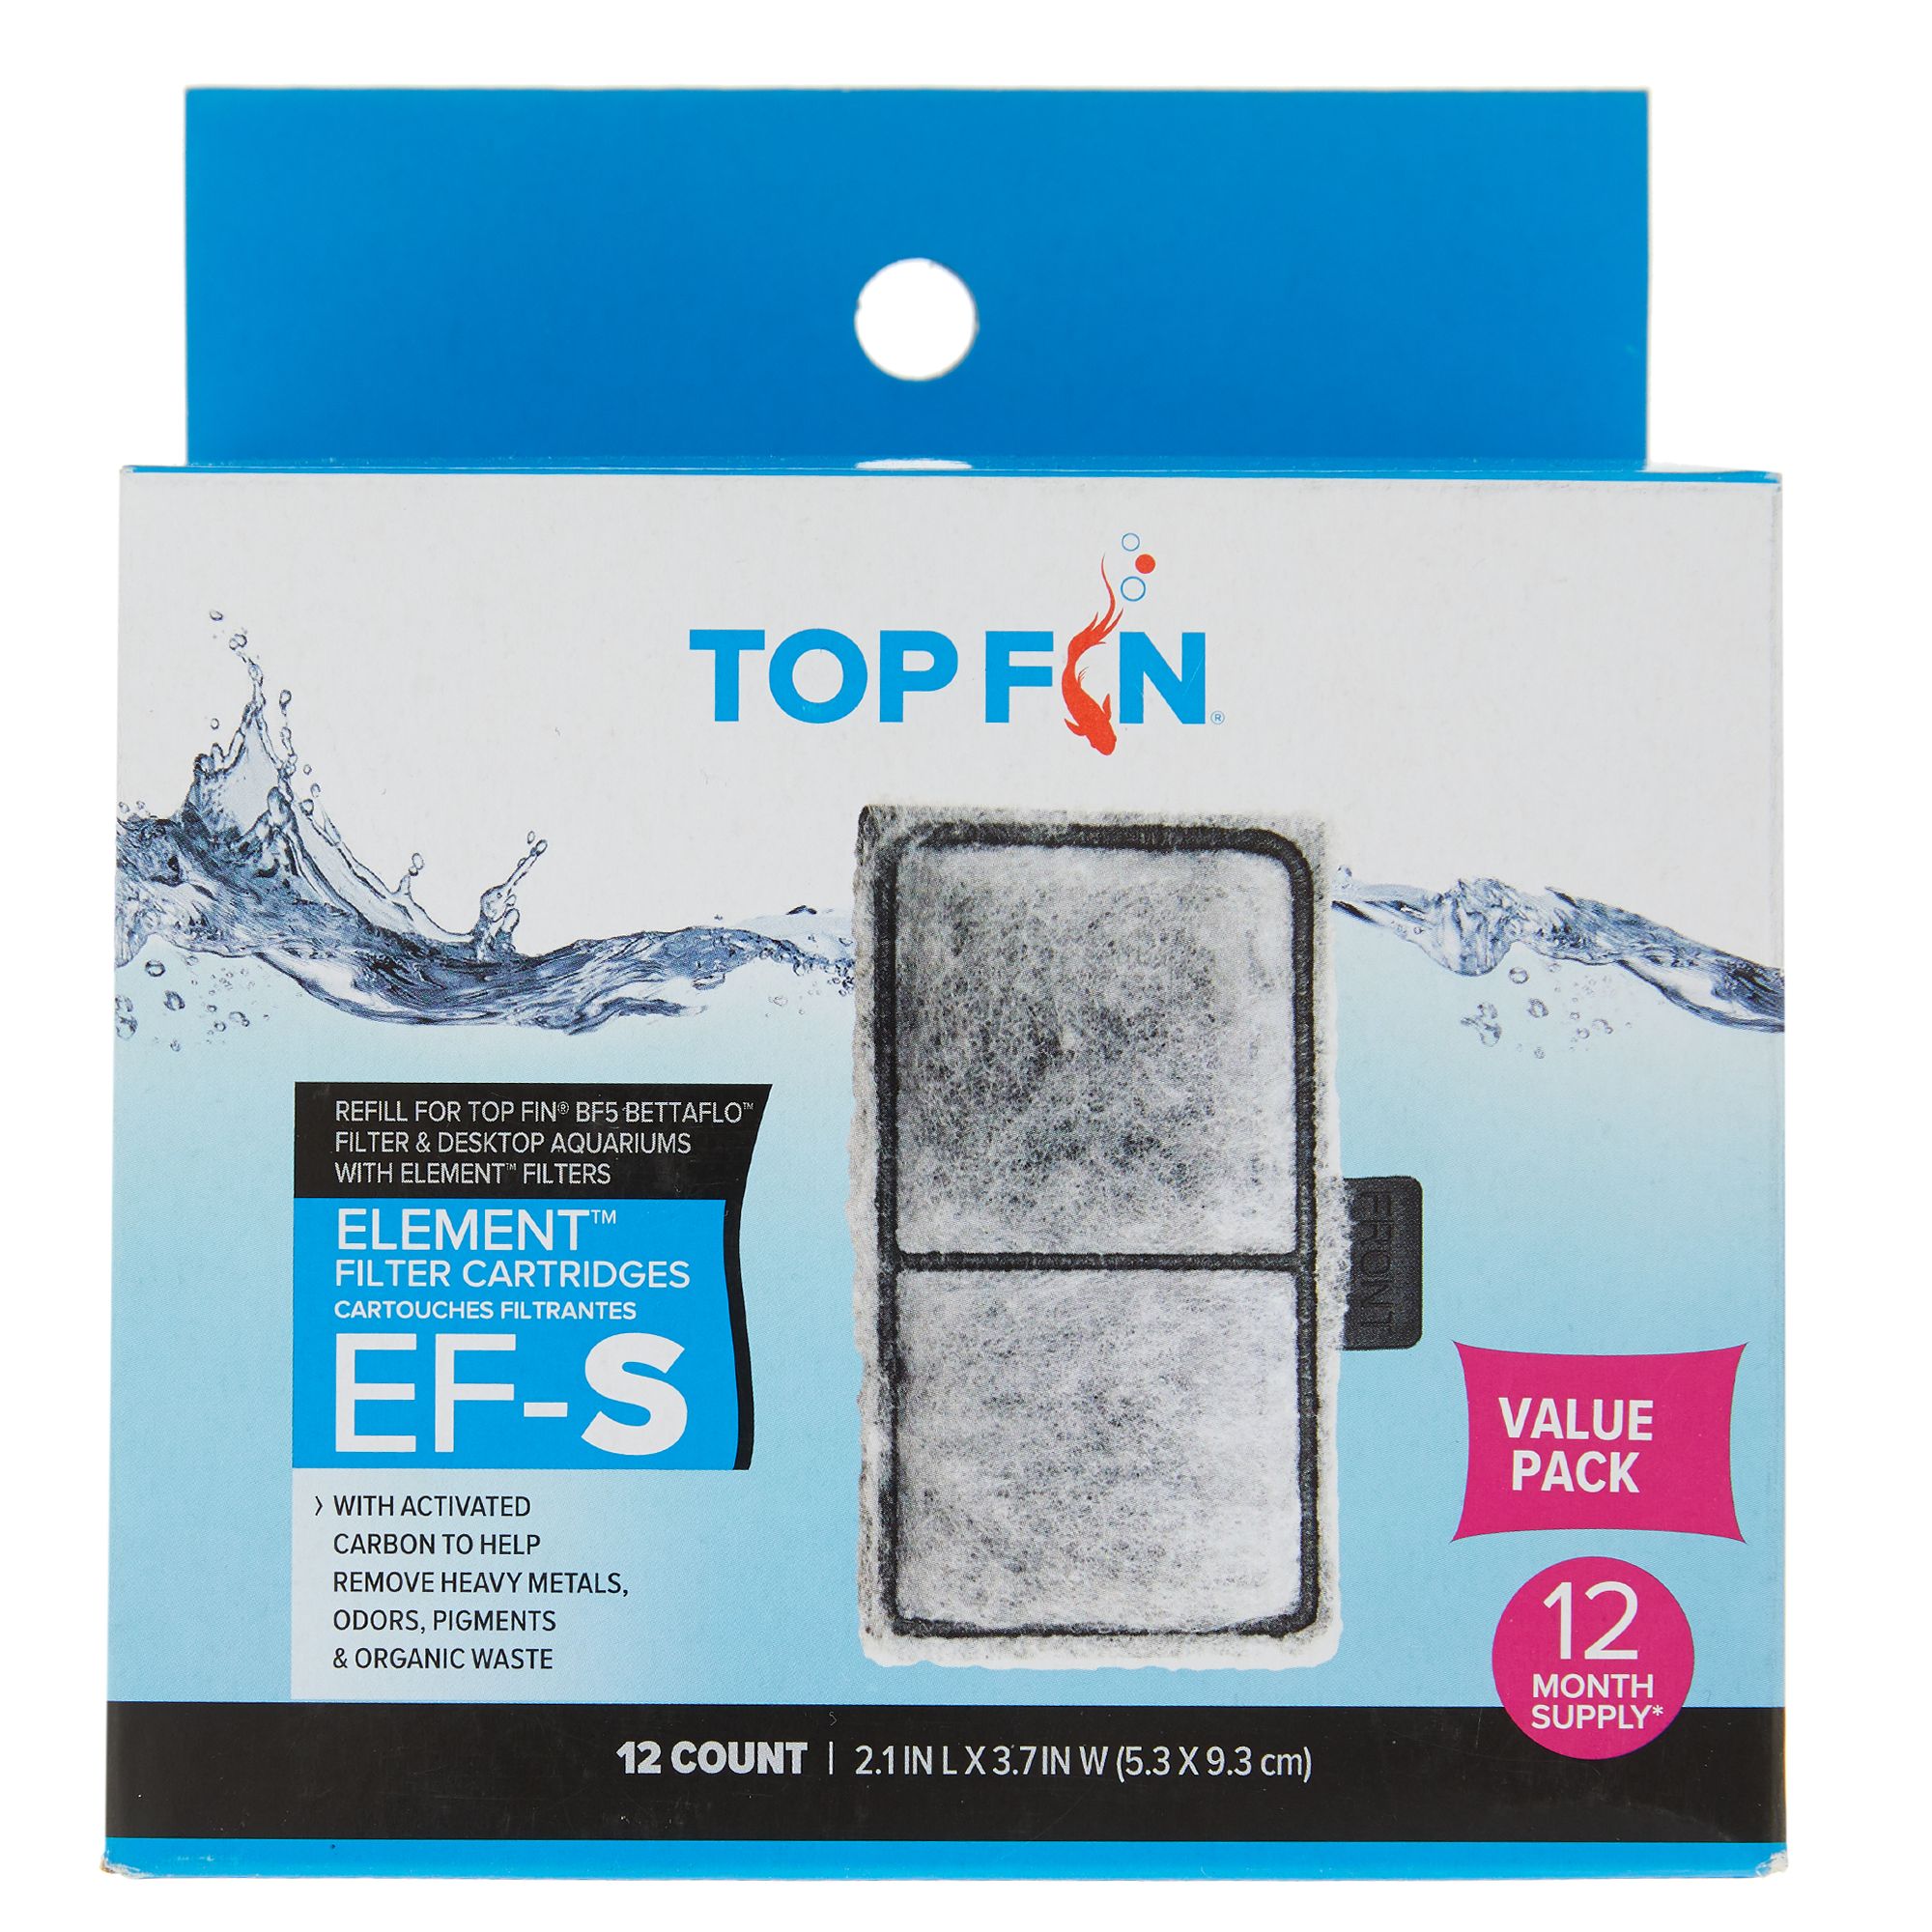 Top Fin® Element EF-S Filter Cartridges, fish Filter Media